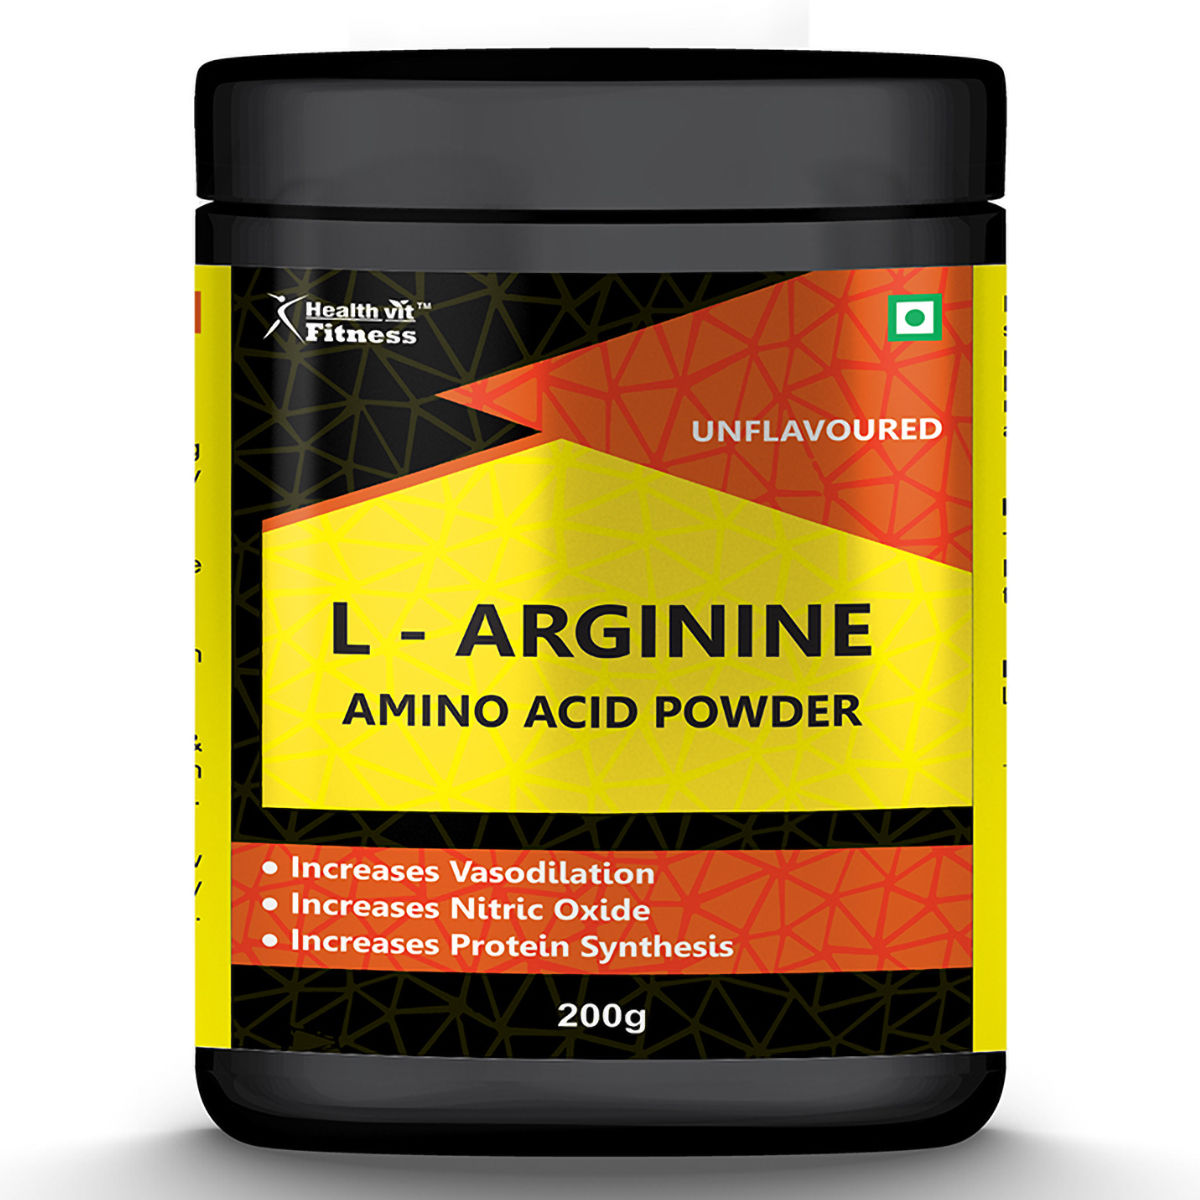 Buy Healthvit Fitness L-Arginine Amino Acid Powder, 200 gm Online